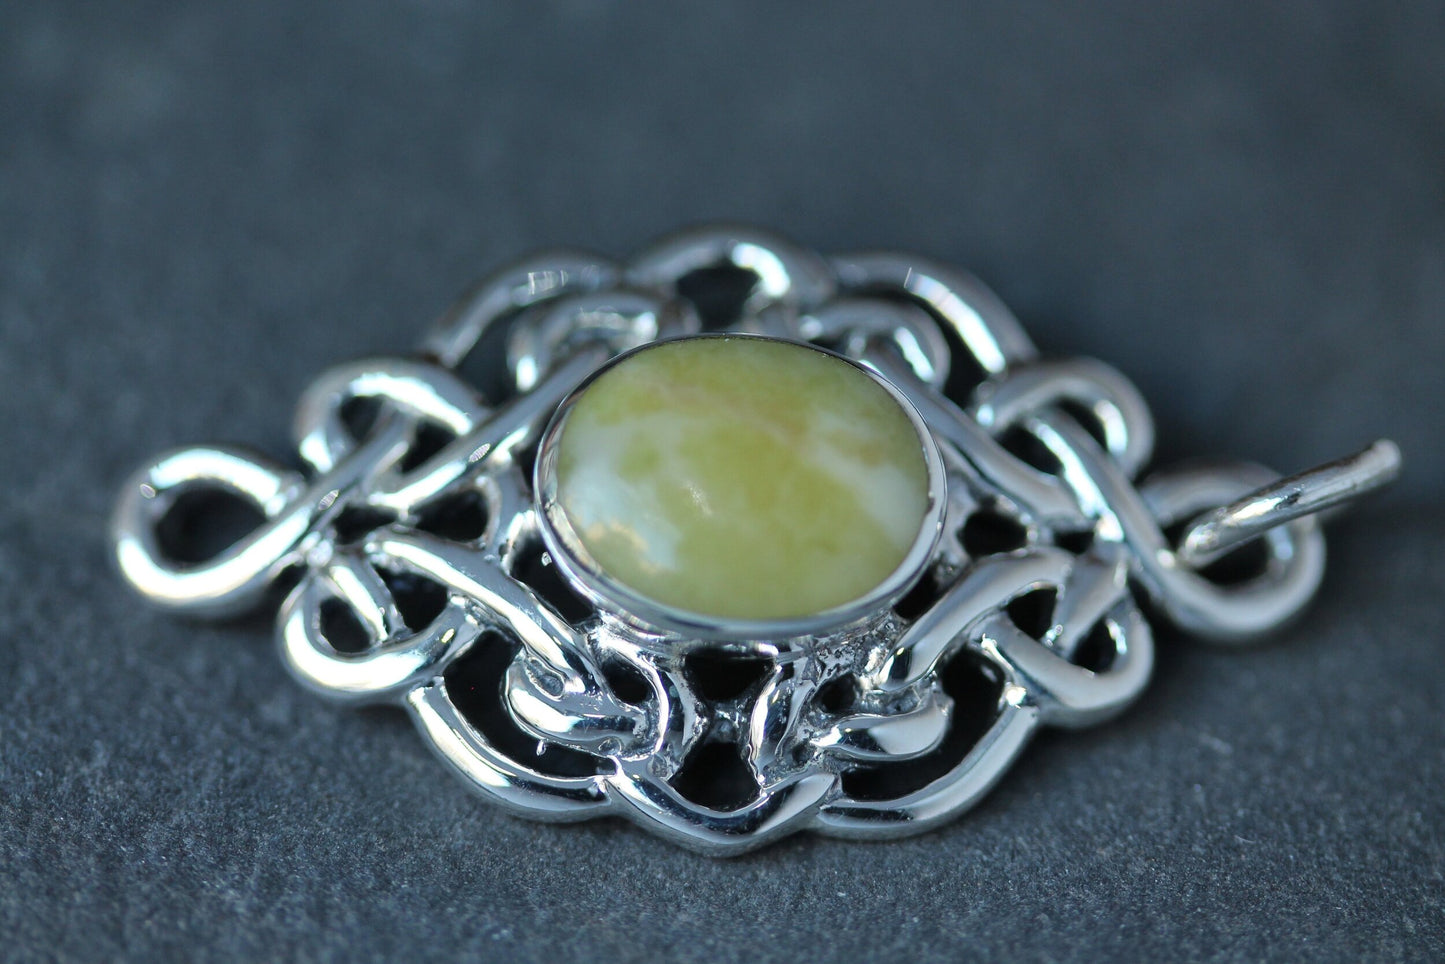 Scottish Marble Pendant - Oval Celtic Knot